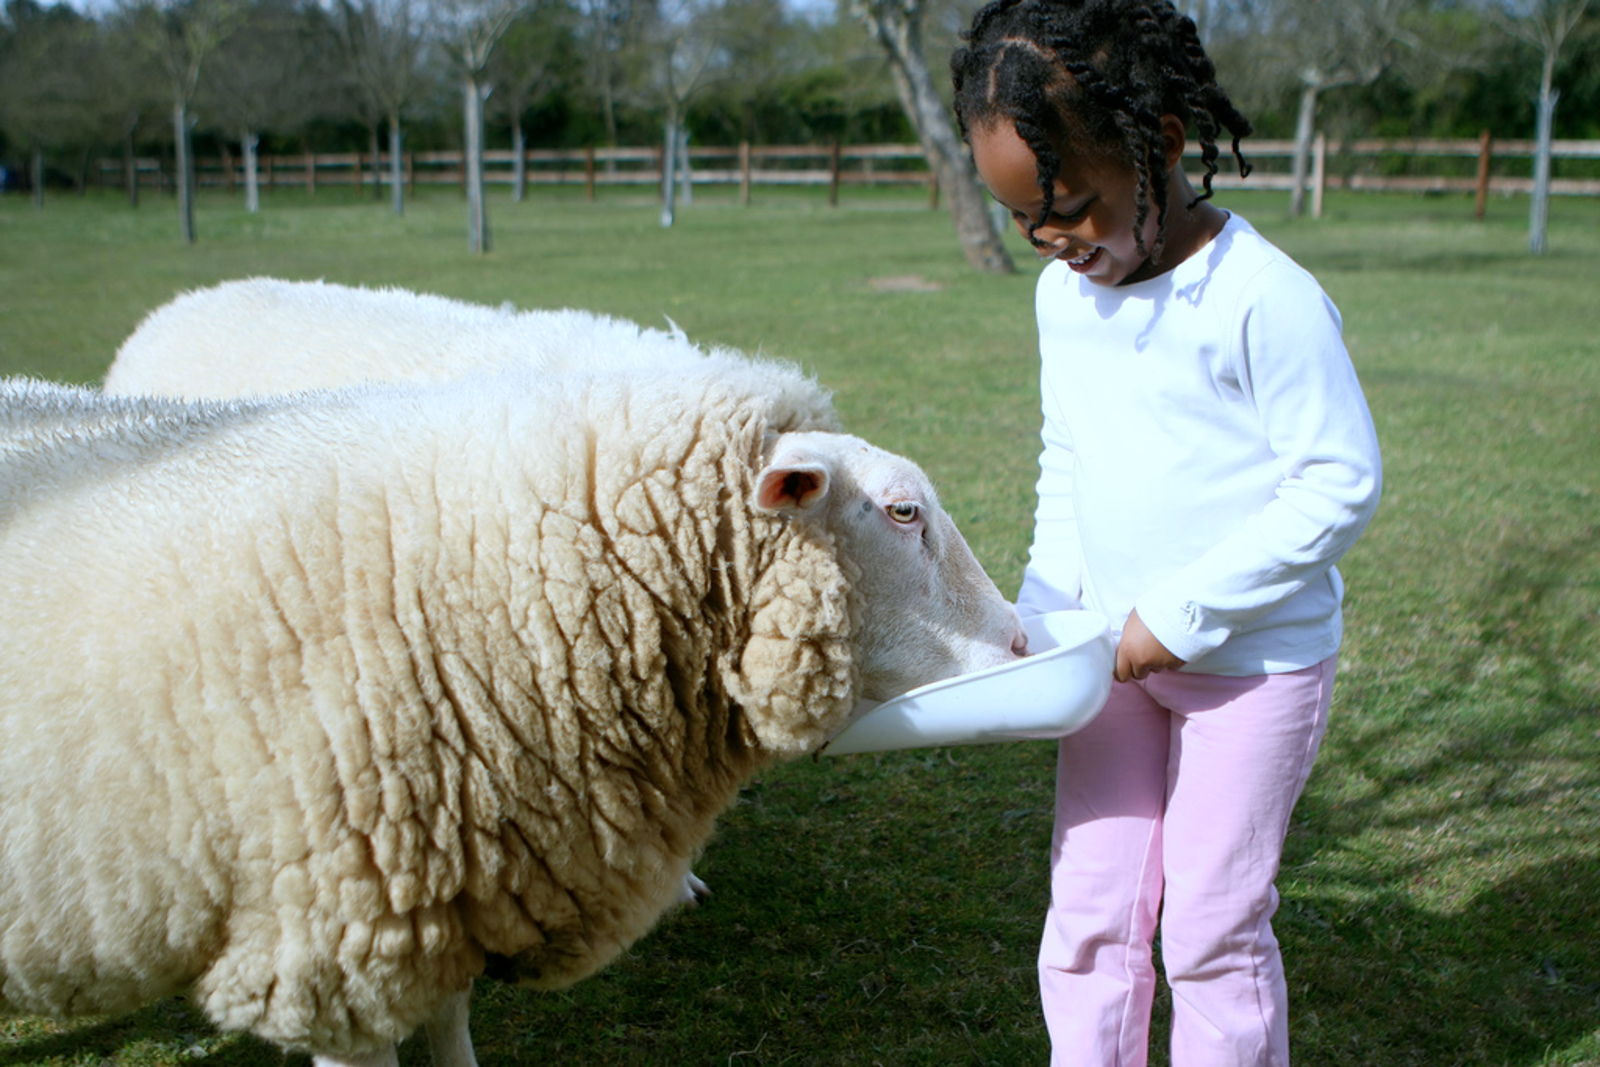 Farm Sanctuary Programs Teach Kids Compassion for All Animals